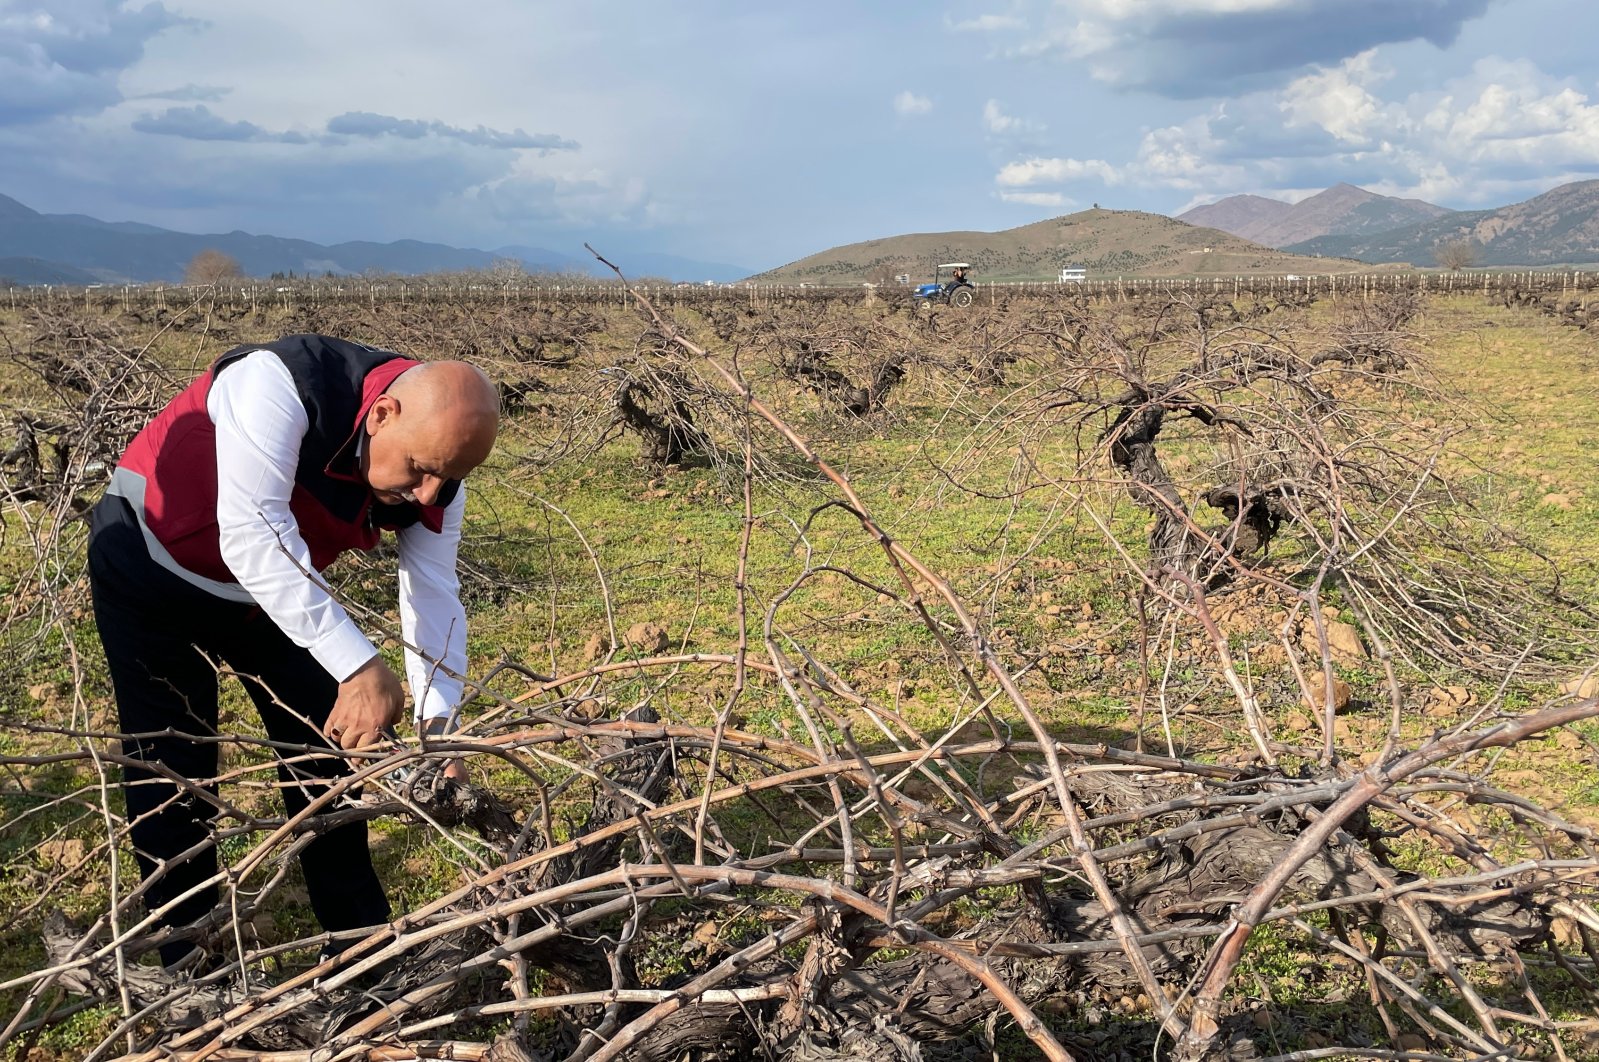 Türkiye untuk mengubah 11 pasal tentang hutan, hukum pertanian: Kementerian